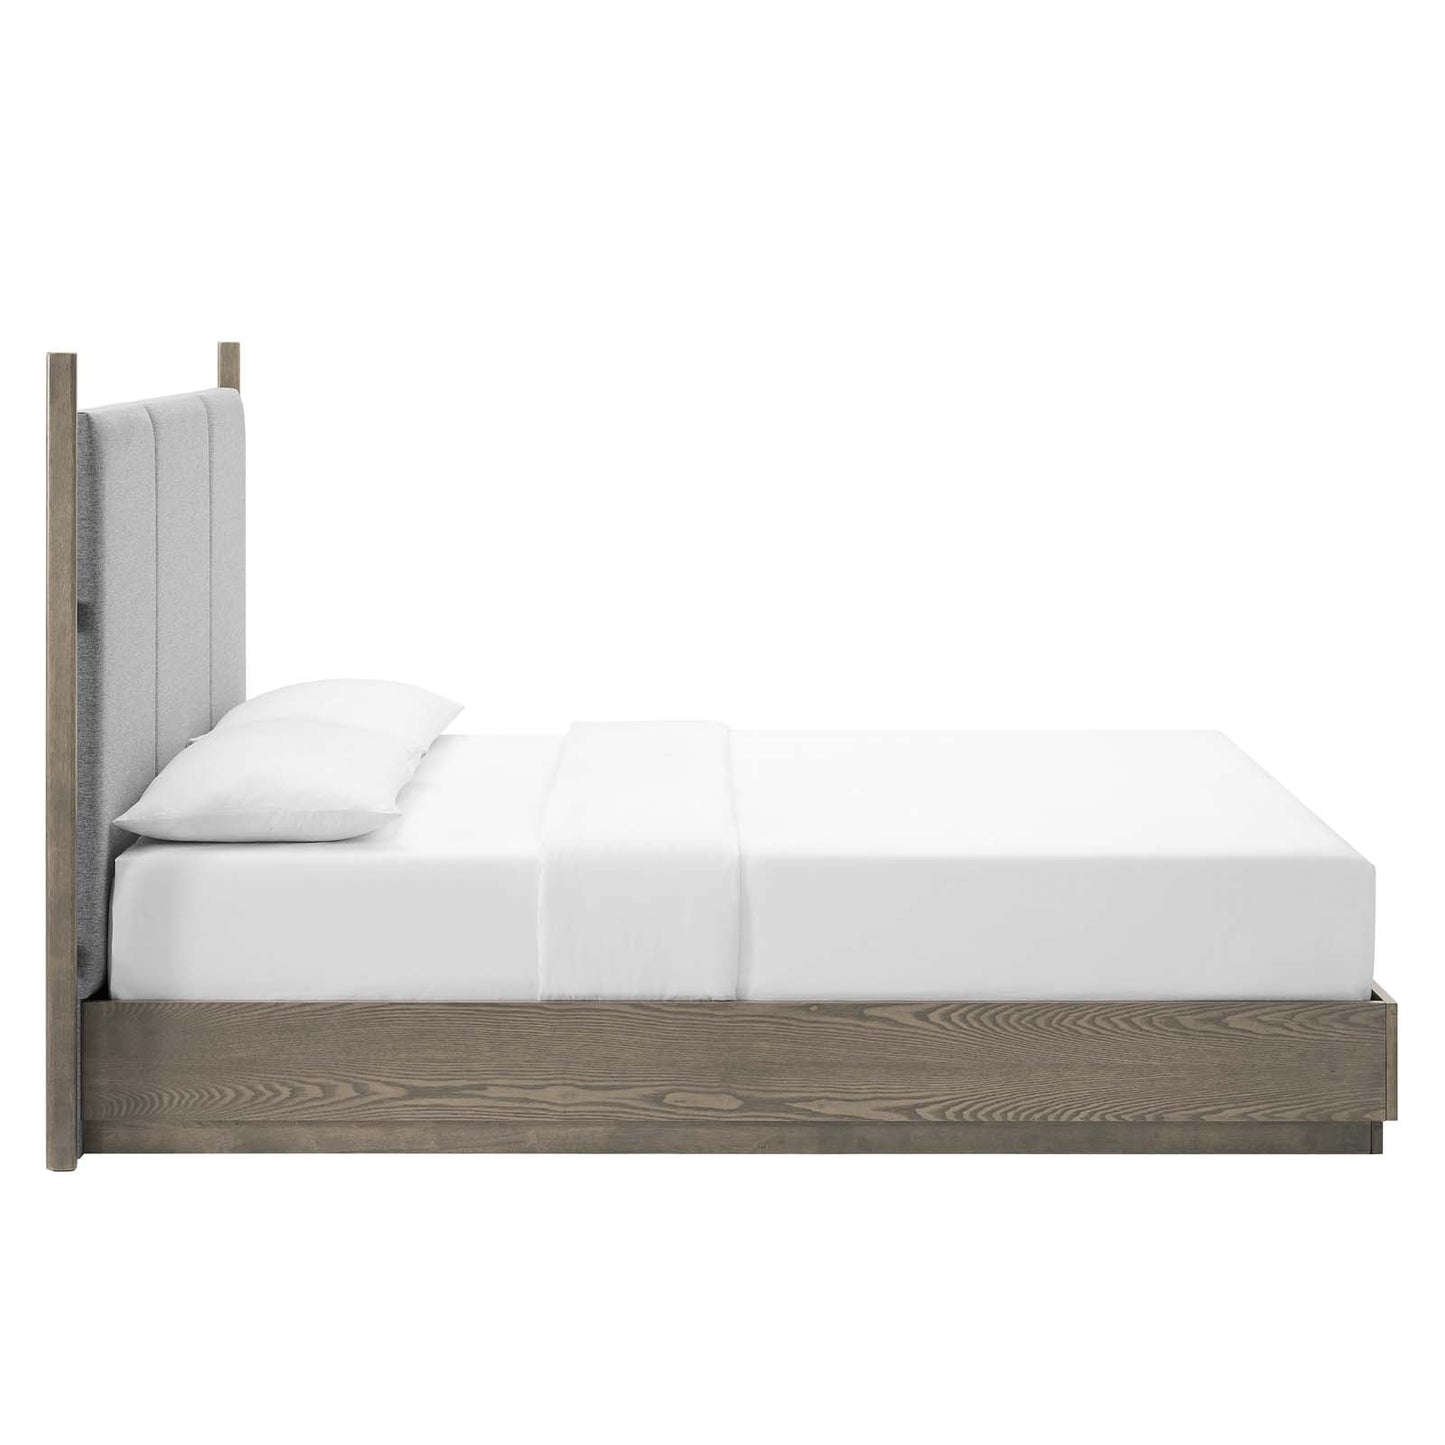 Modway Beds & Bed Frames Merritt Queen Upholstered Platform Bed MOD-6680-OAK-LGR